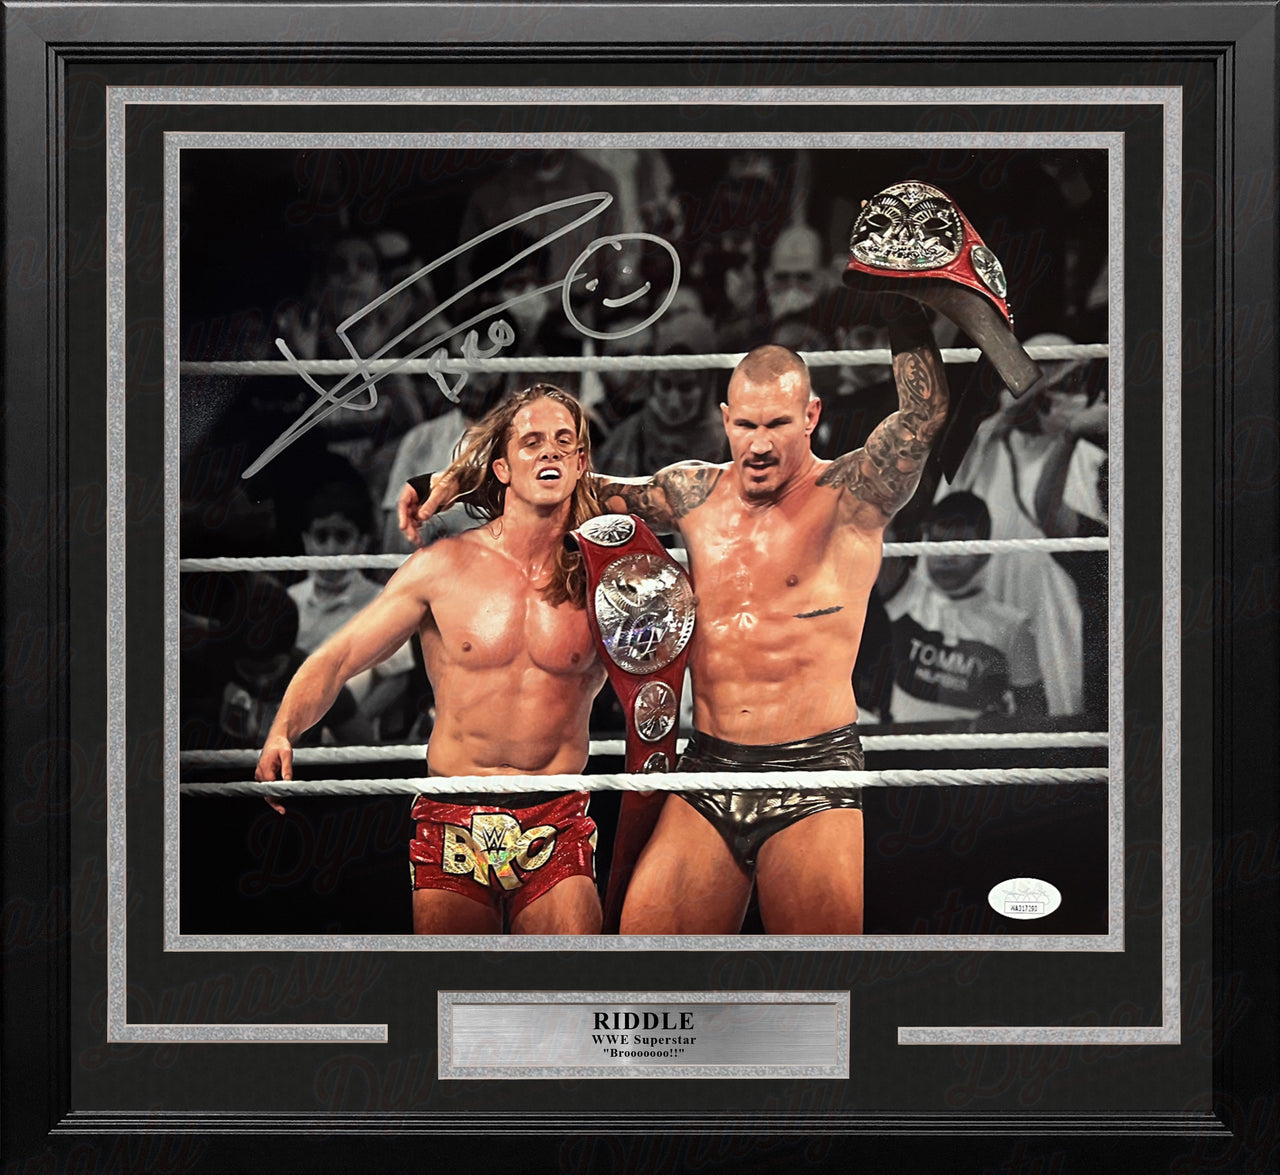 Riddle RK-Bro Autographed Framed WWE Wrestling Photo - Dynasty Sports & Framing 